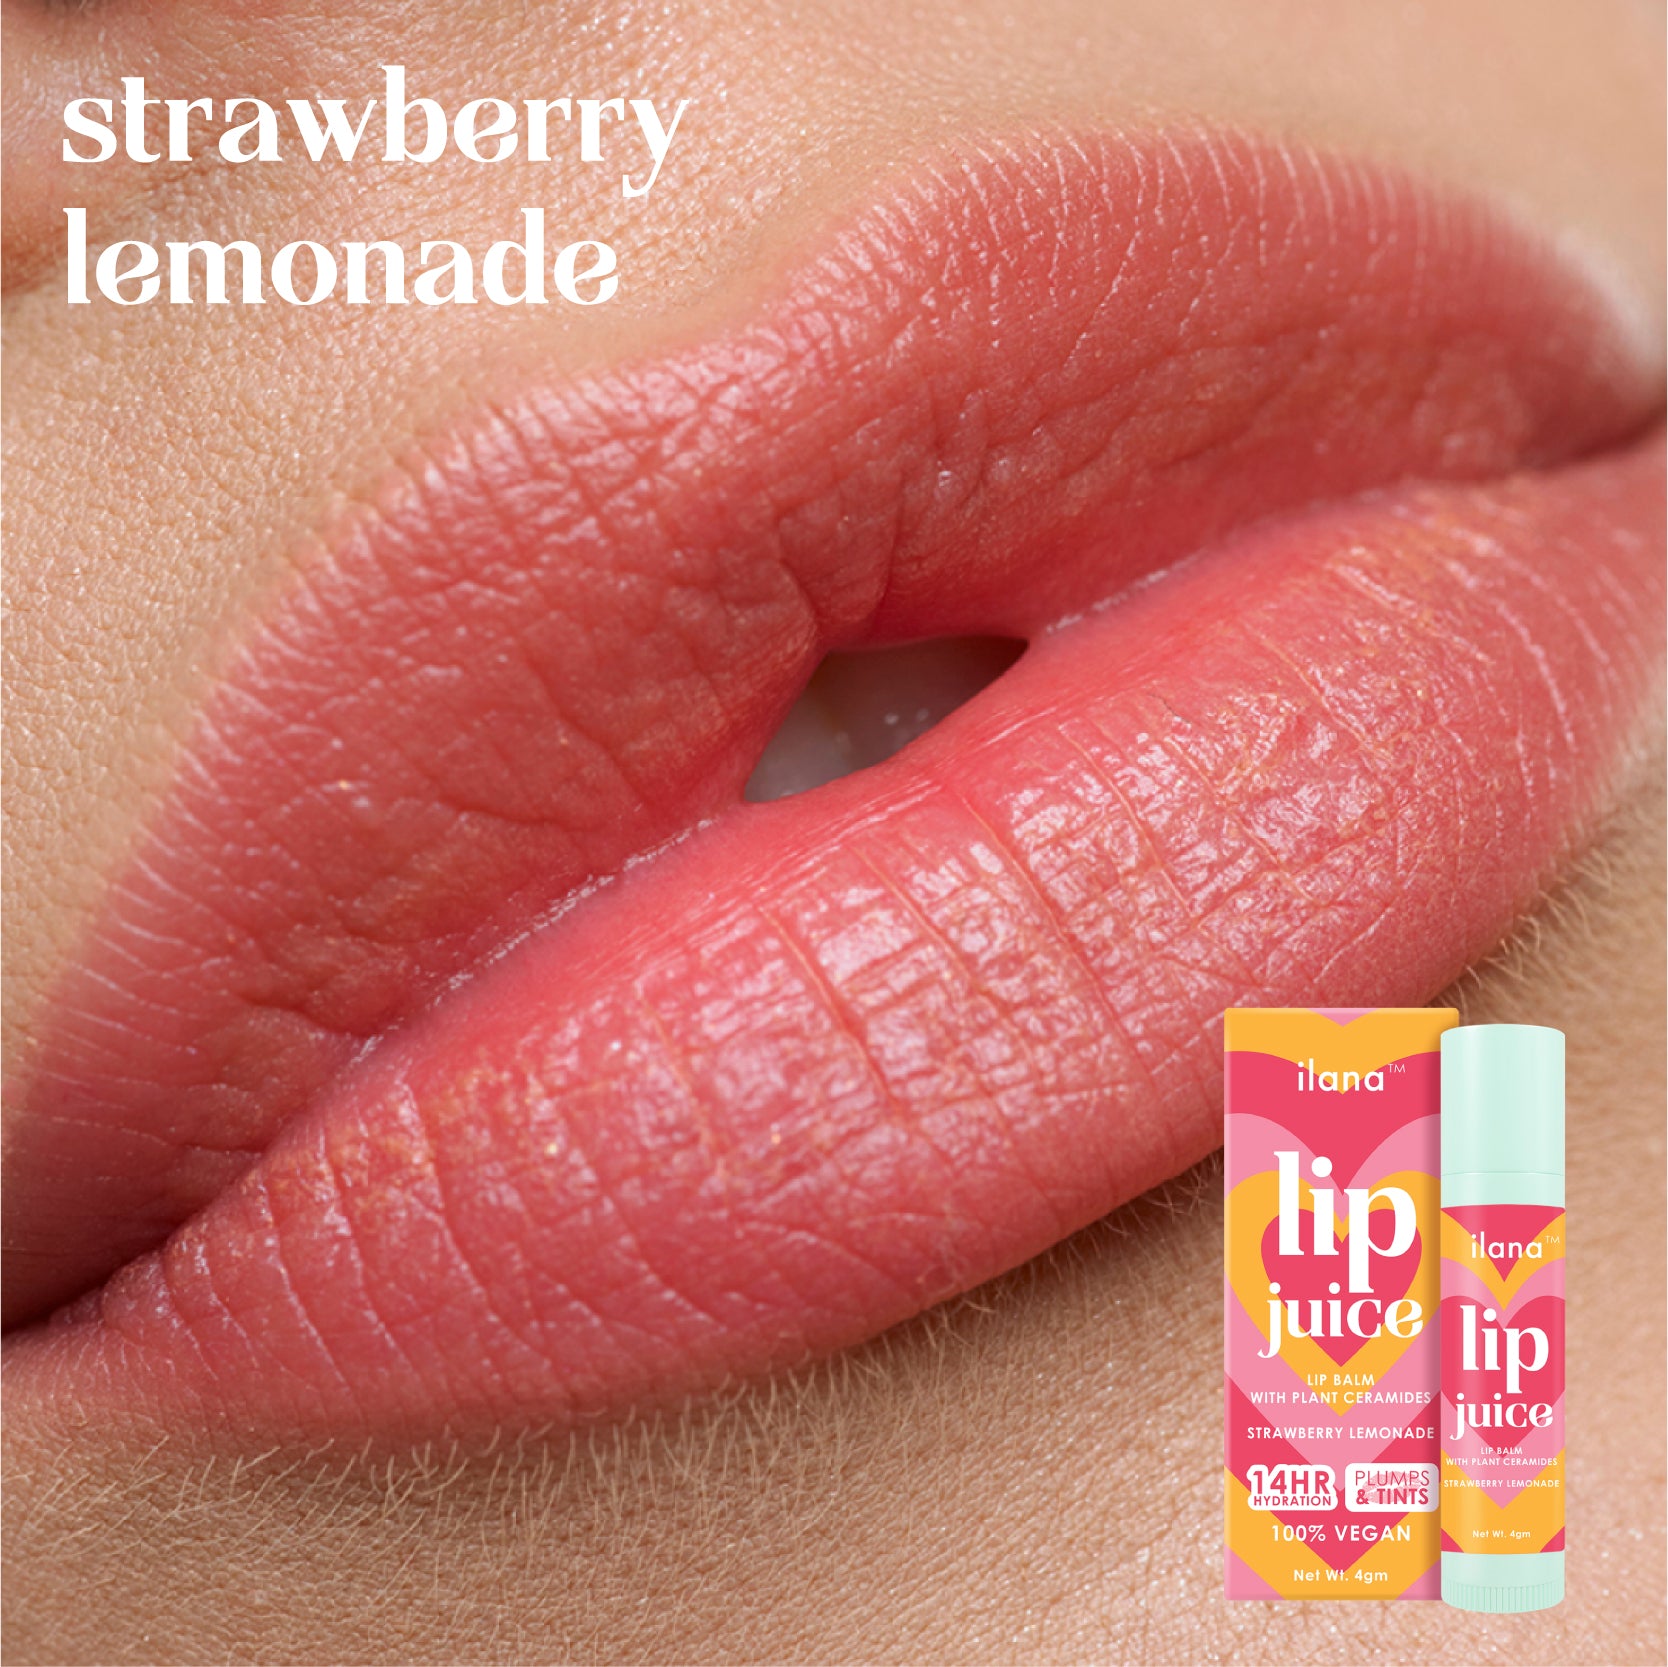 ilana - Lip Juice - Hydrating and plumping vegan tinted lip balm with plant ceramides - 14 hr hydration - Strawberry Lemonade - 4gm